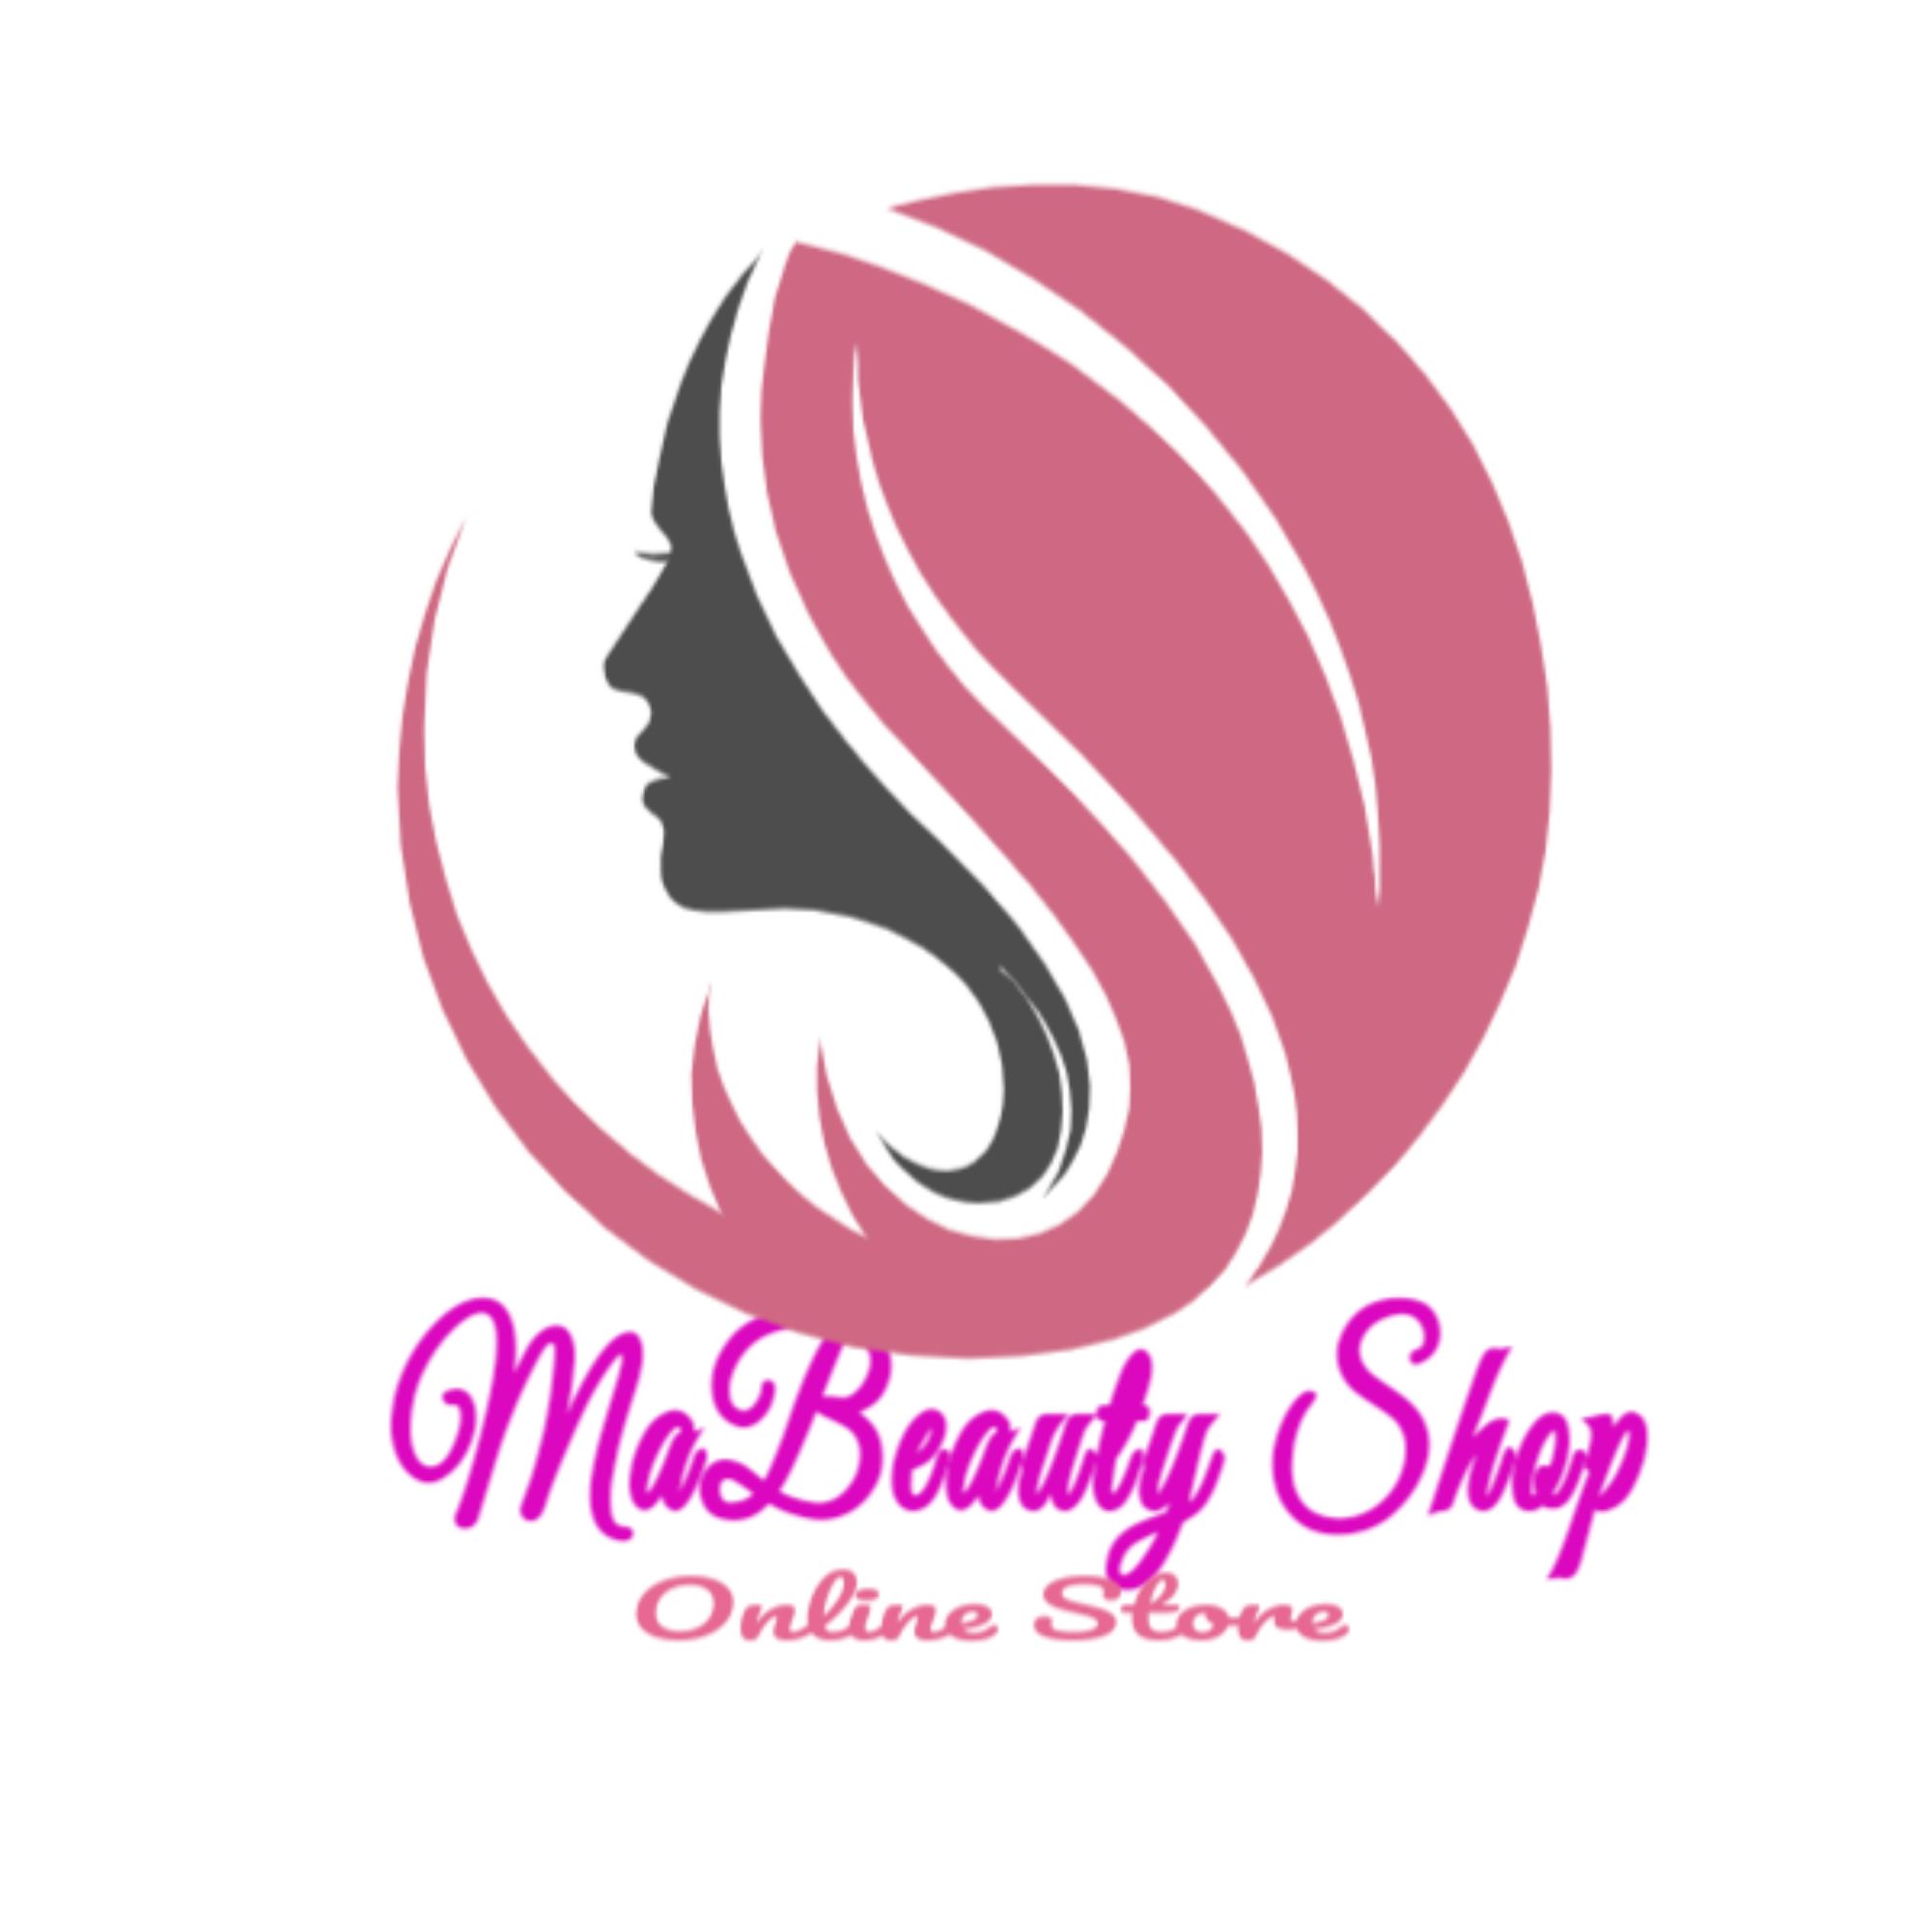 MaBeauty88 Shop, Online Shop | Shopee Philippines